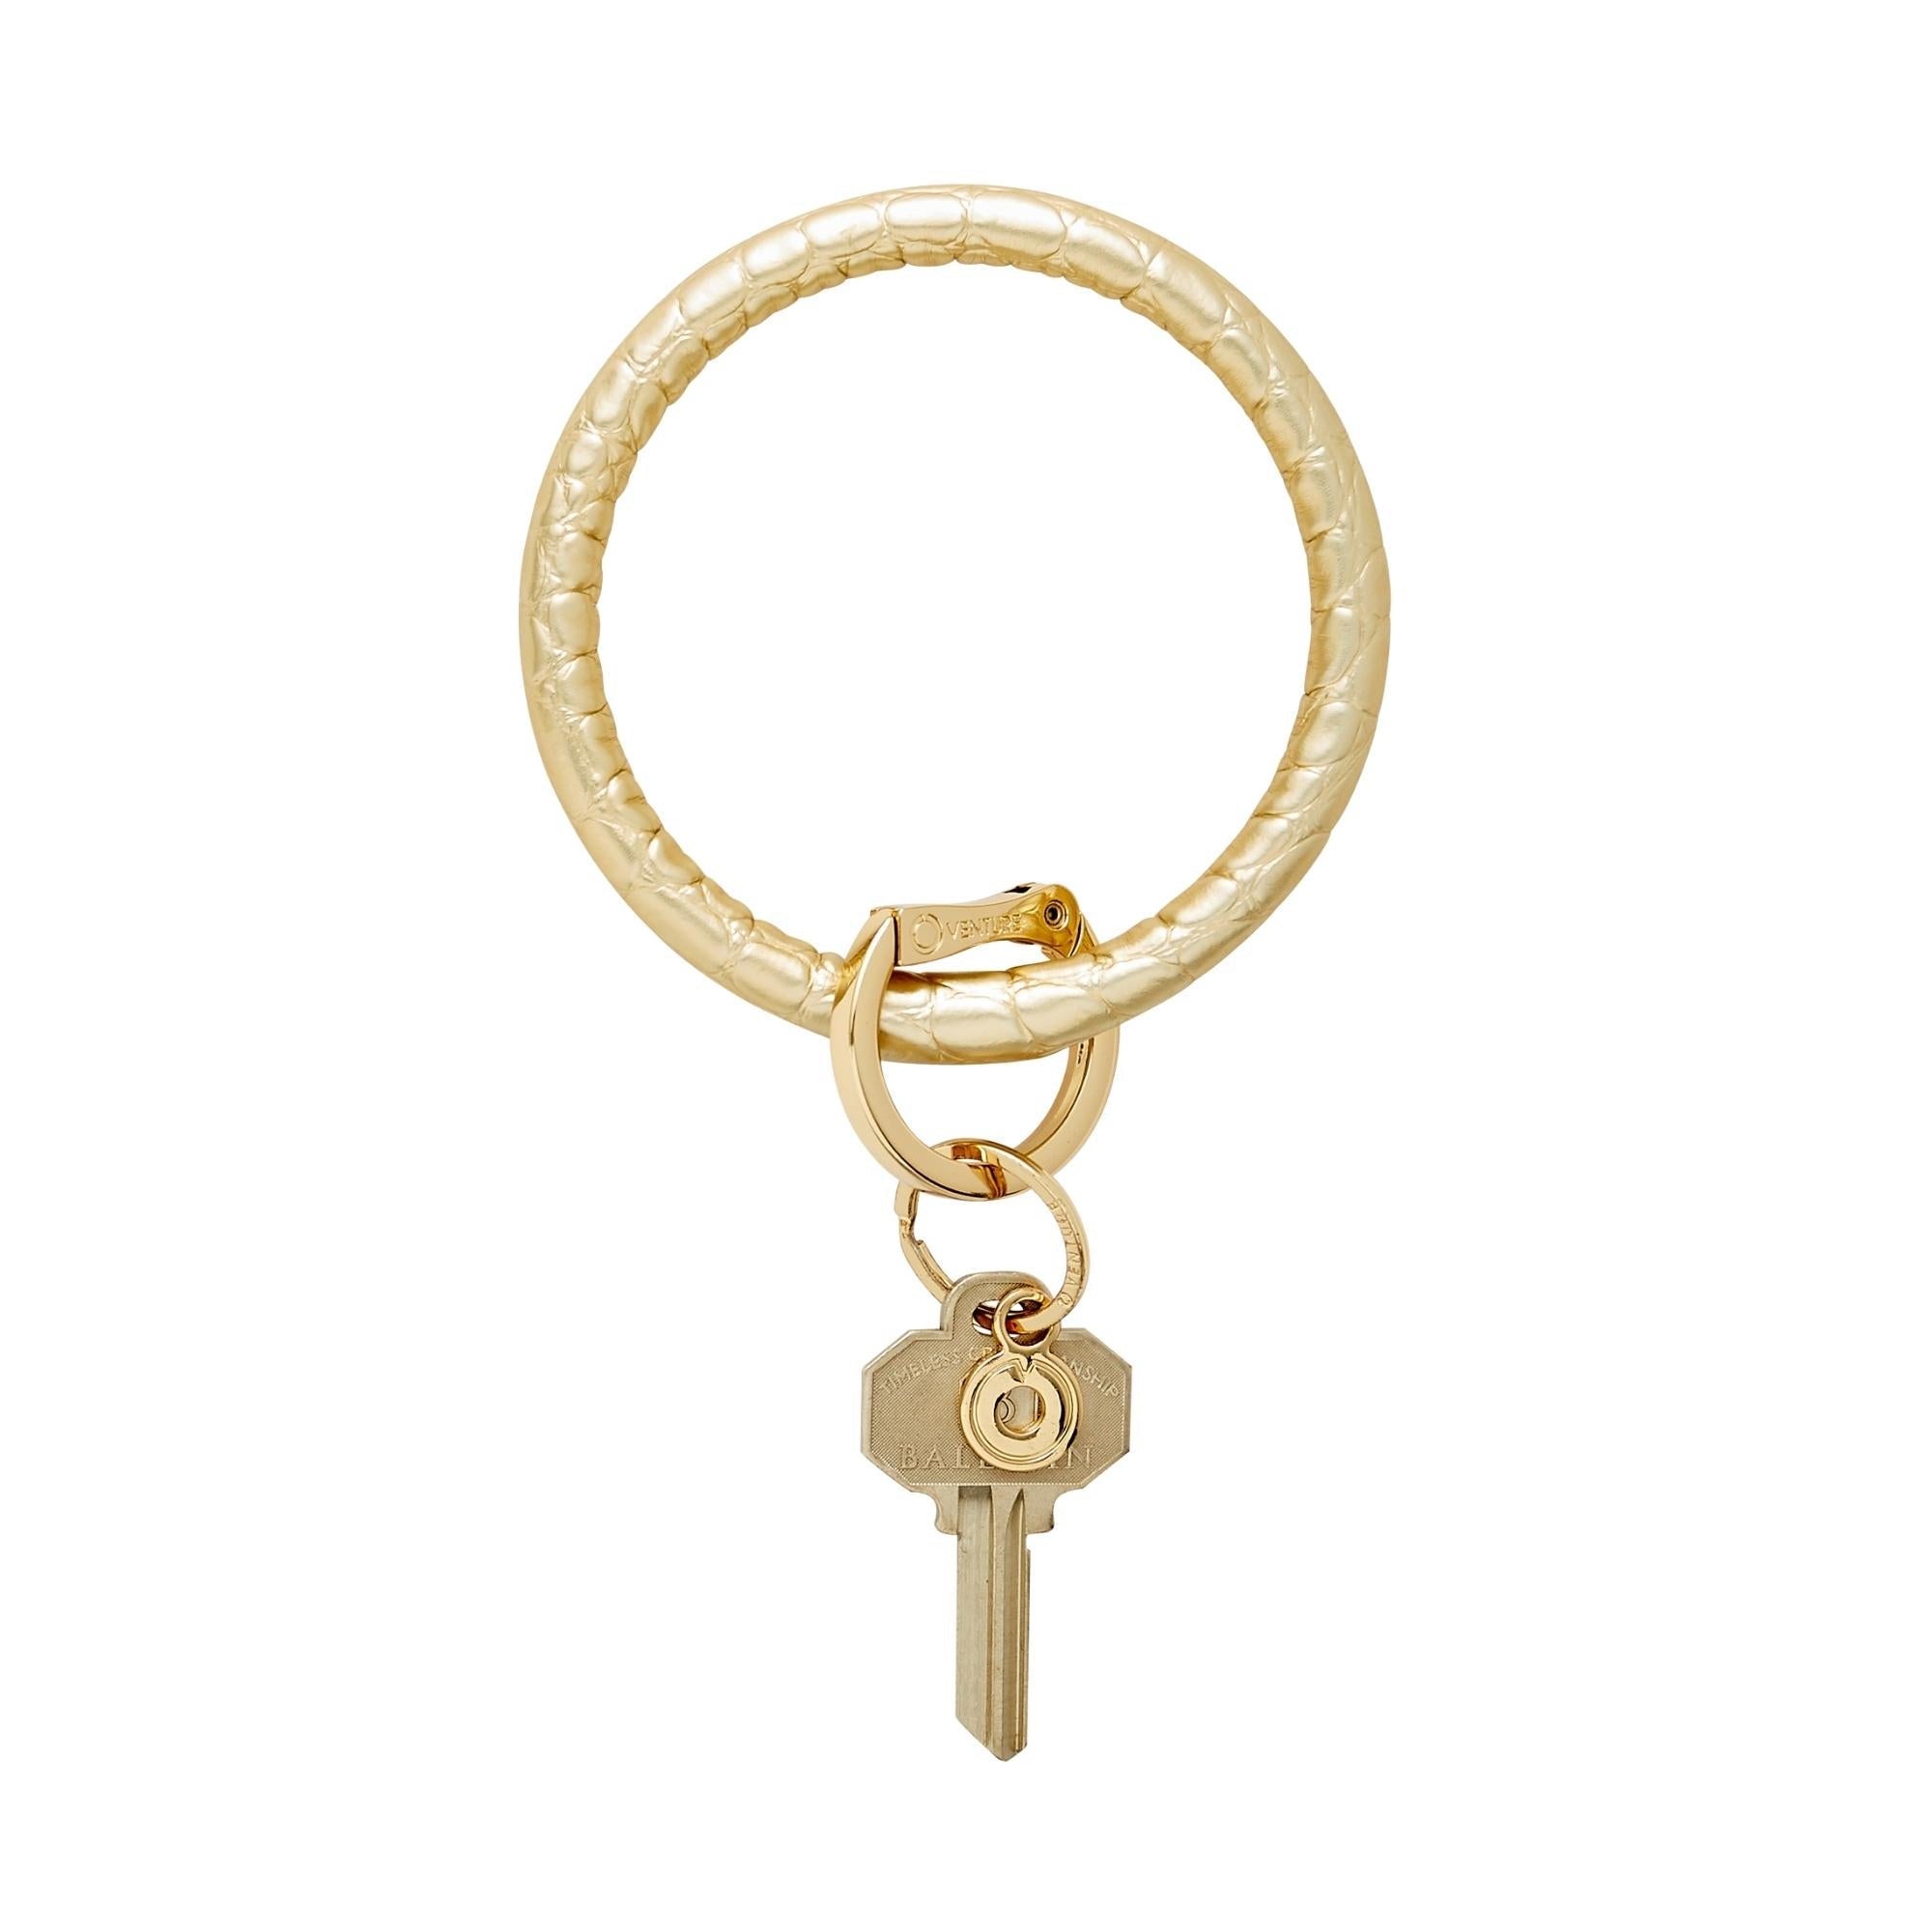 Engraved Name Key Chain - Couple (Model 109) - Wisholize - Key Chain